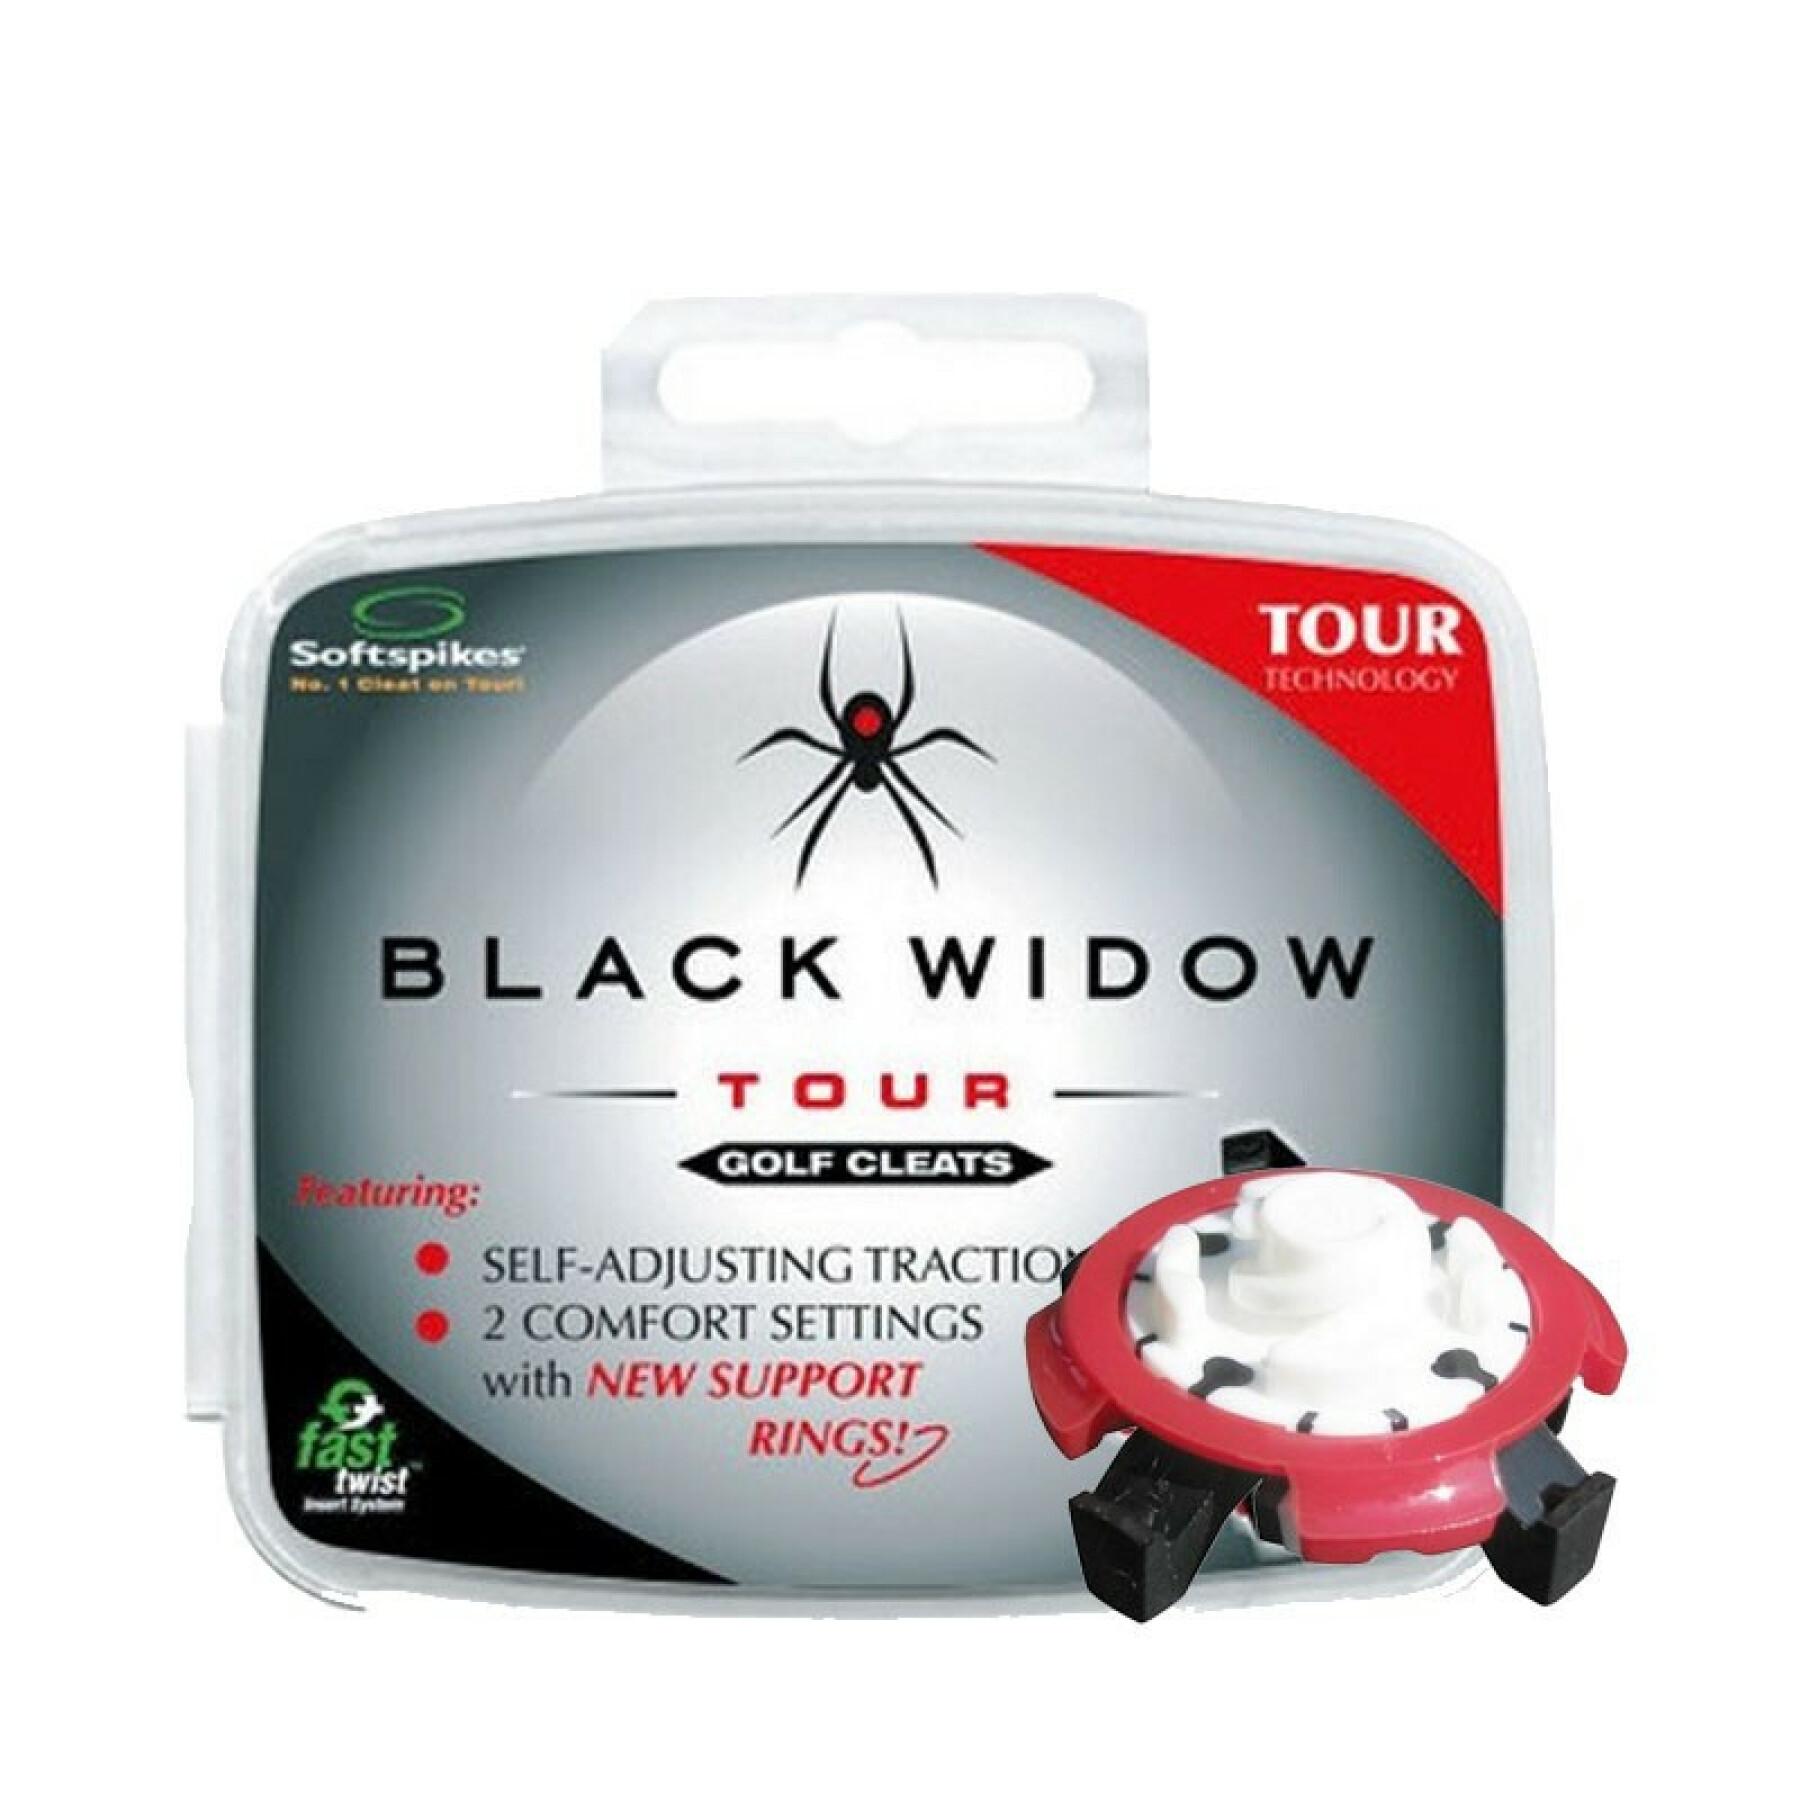 Pinos Softspikes Black Widow tour fast twist